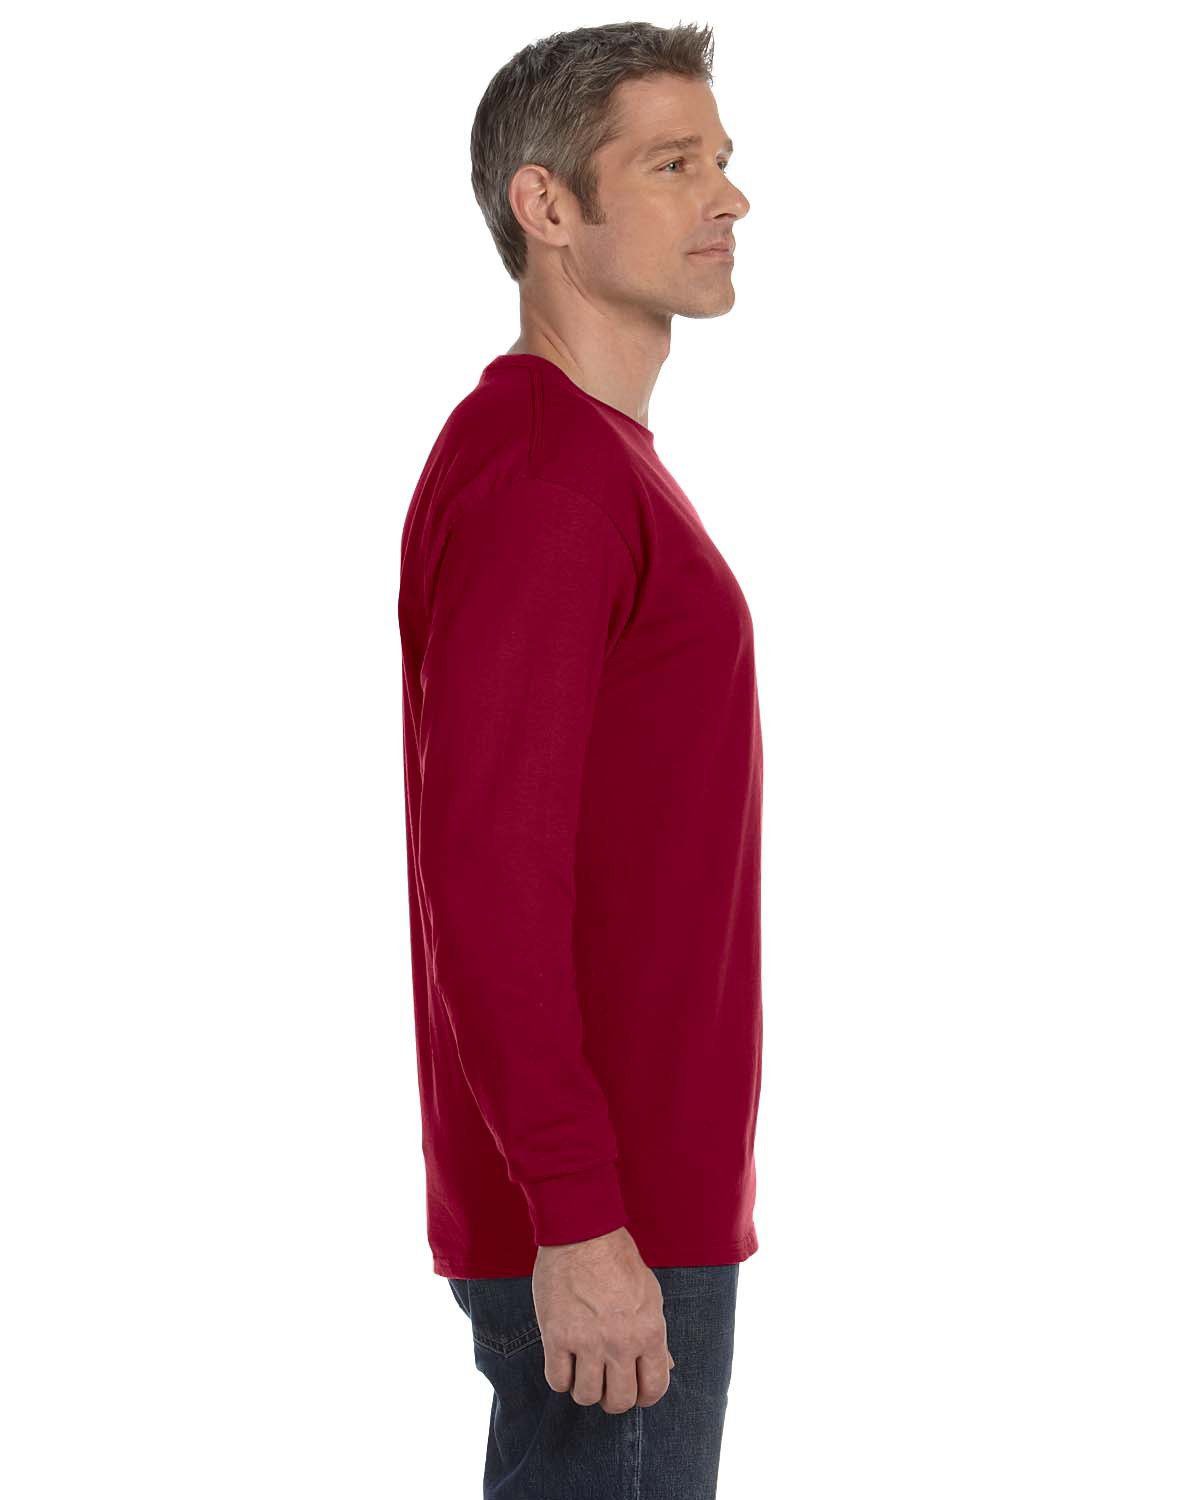 Gildan Adult Heavy Cotton Long-Sleeve T-Shirt #5400 Maroon Side